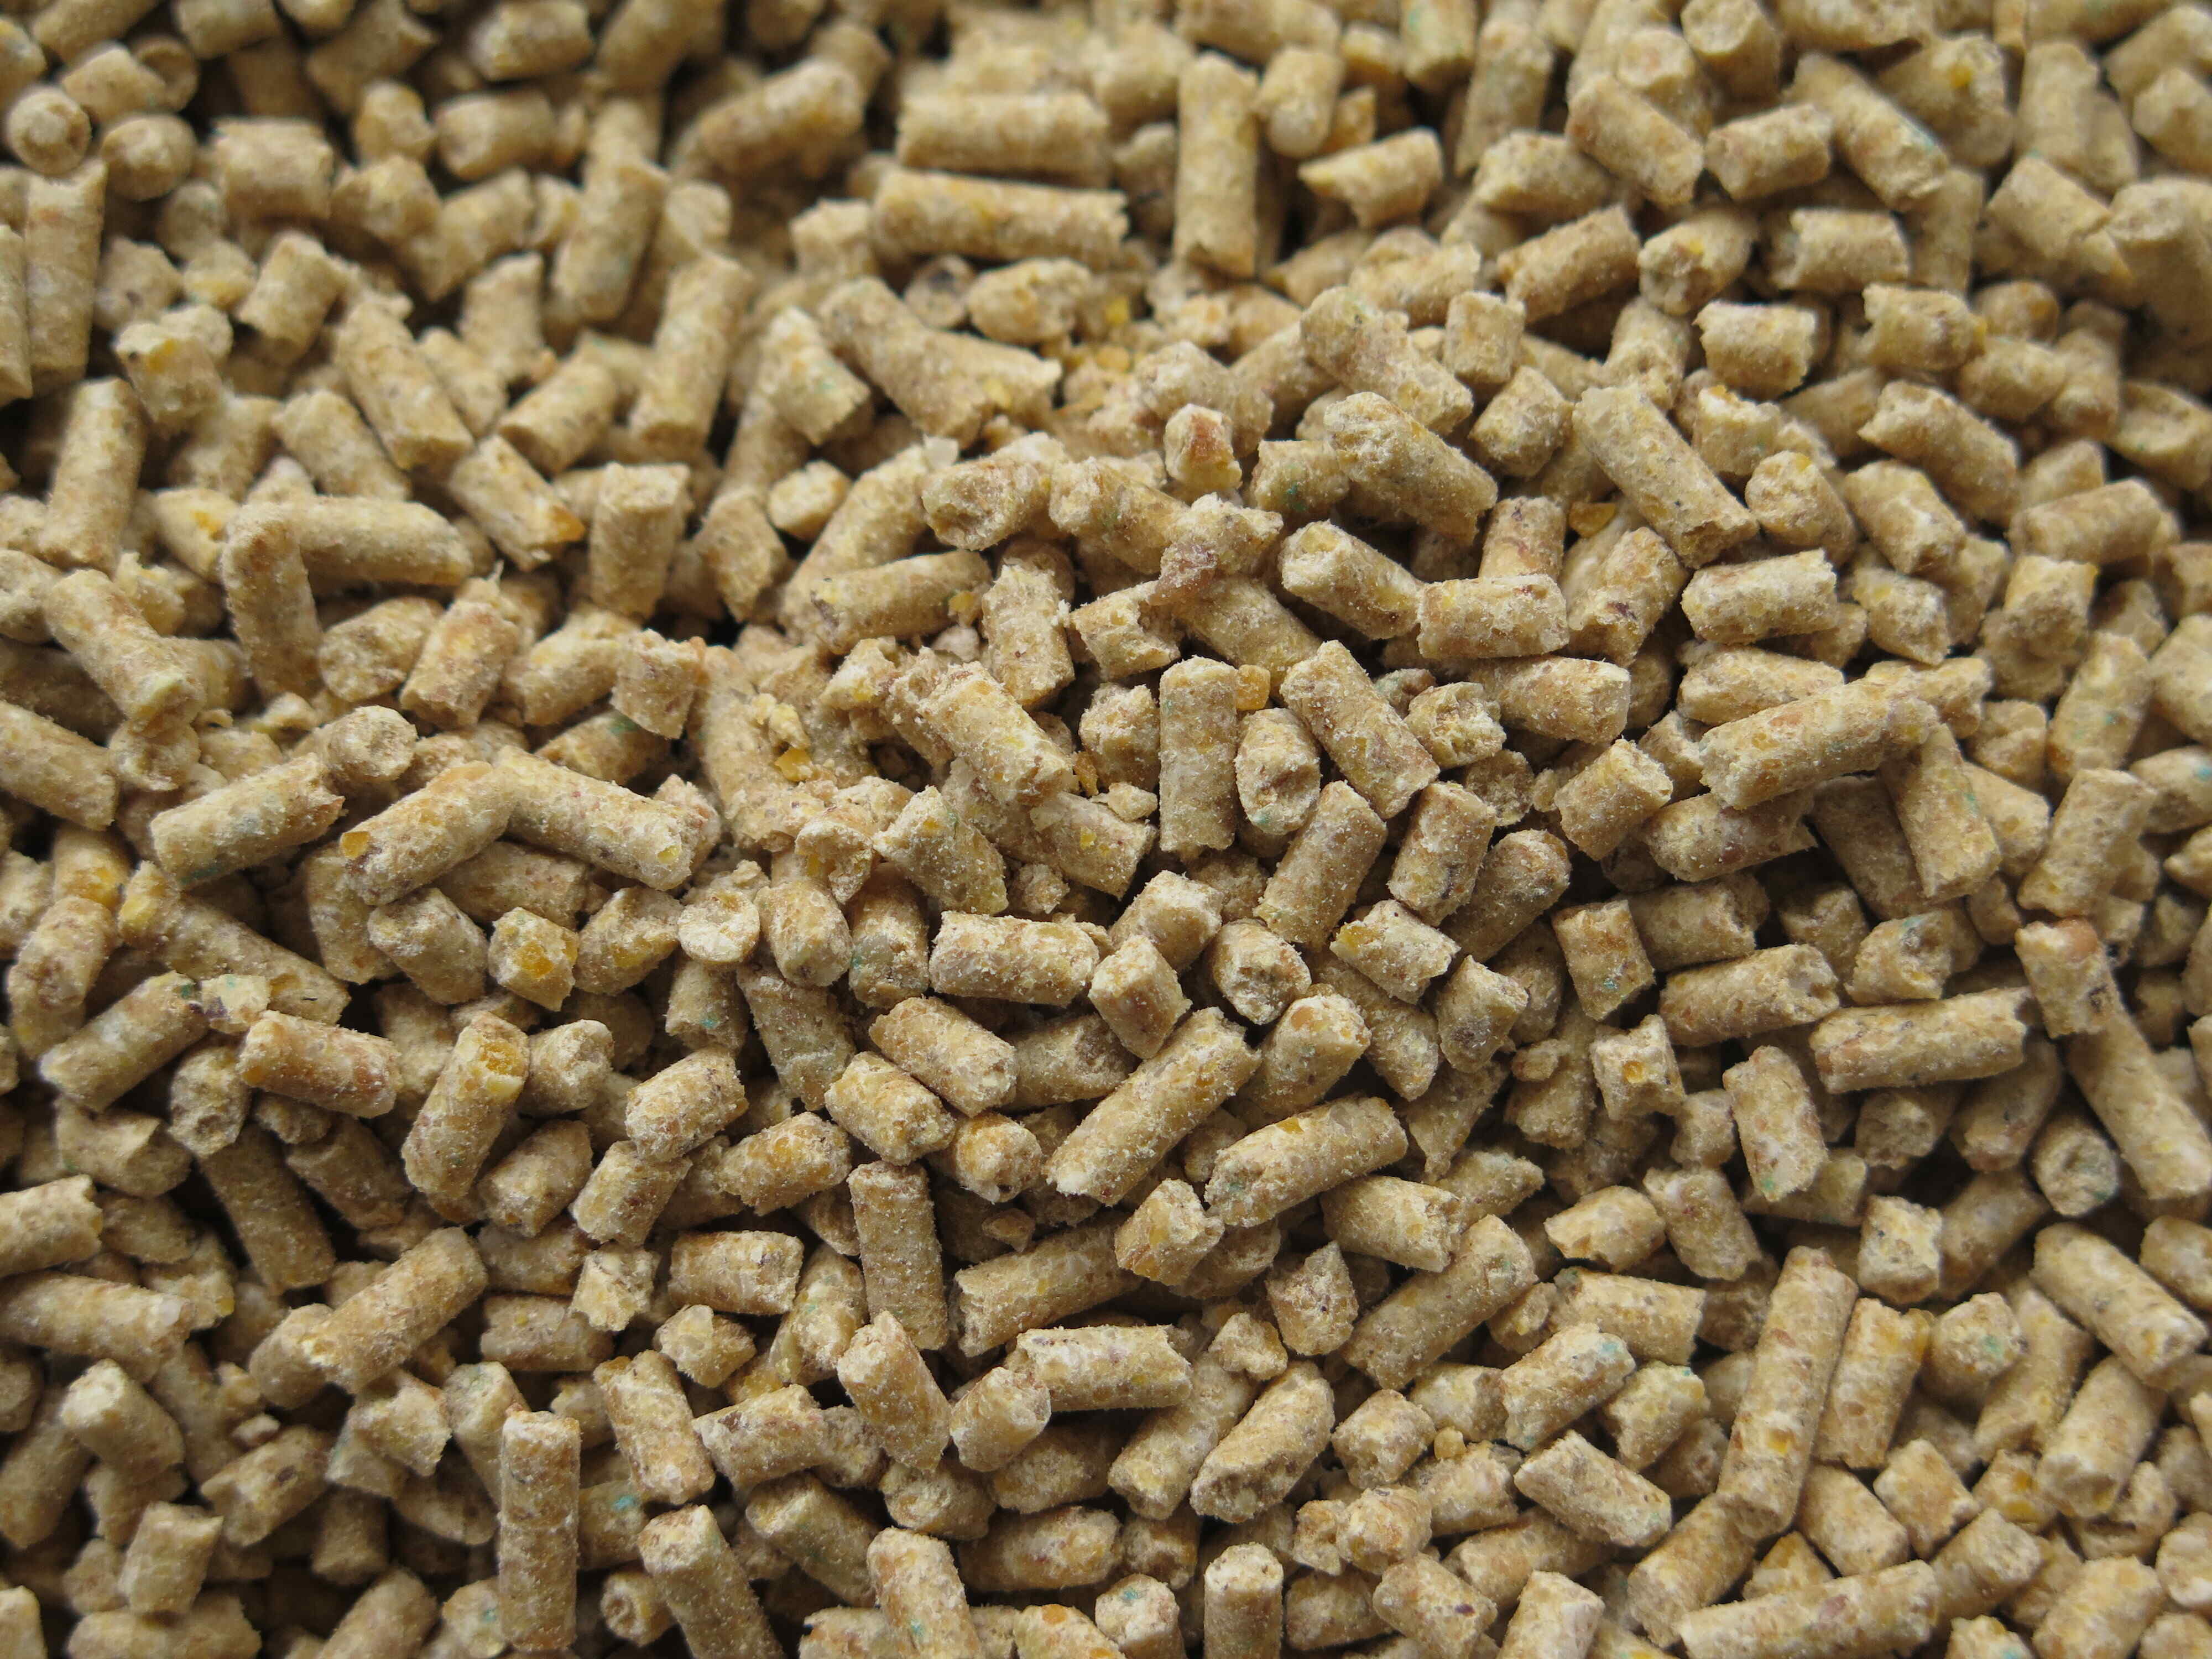 Bentonite animal feed additives